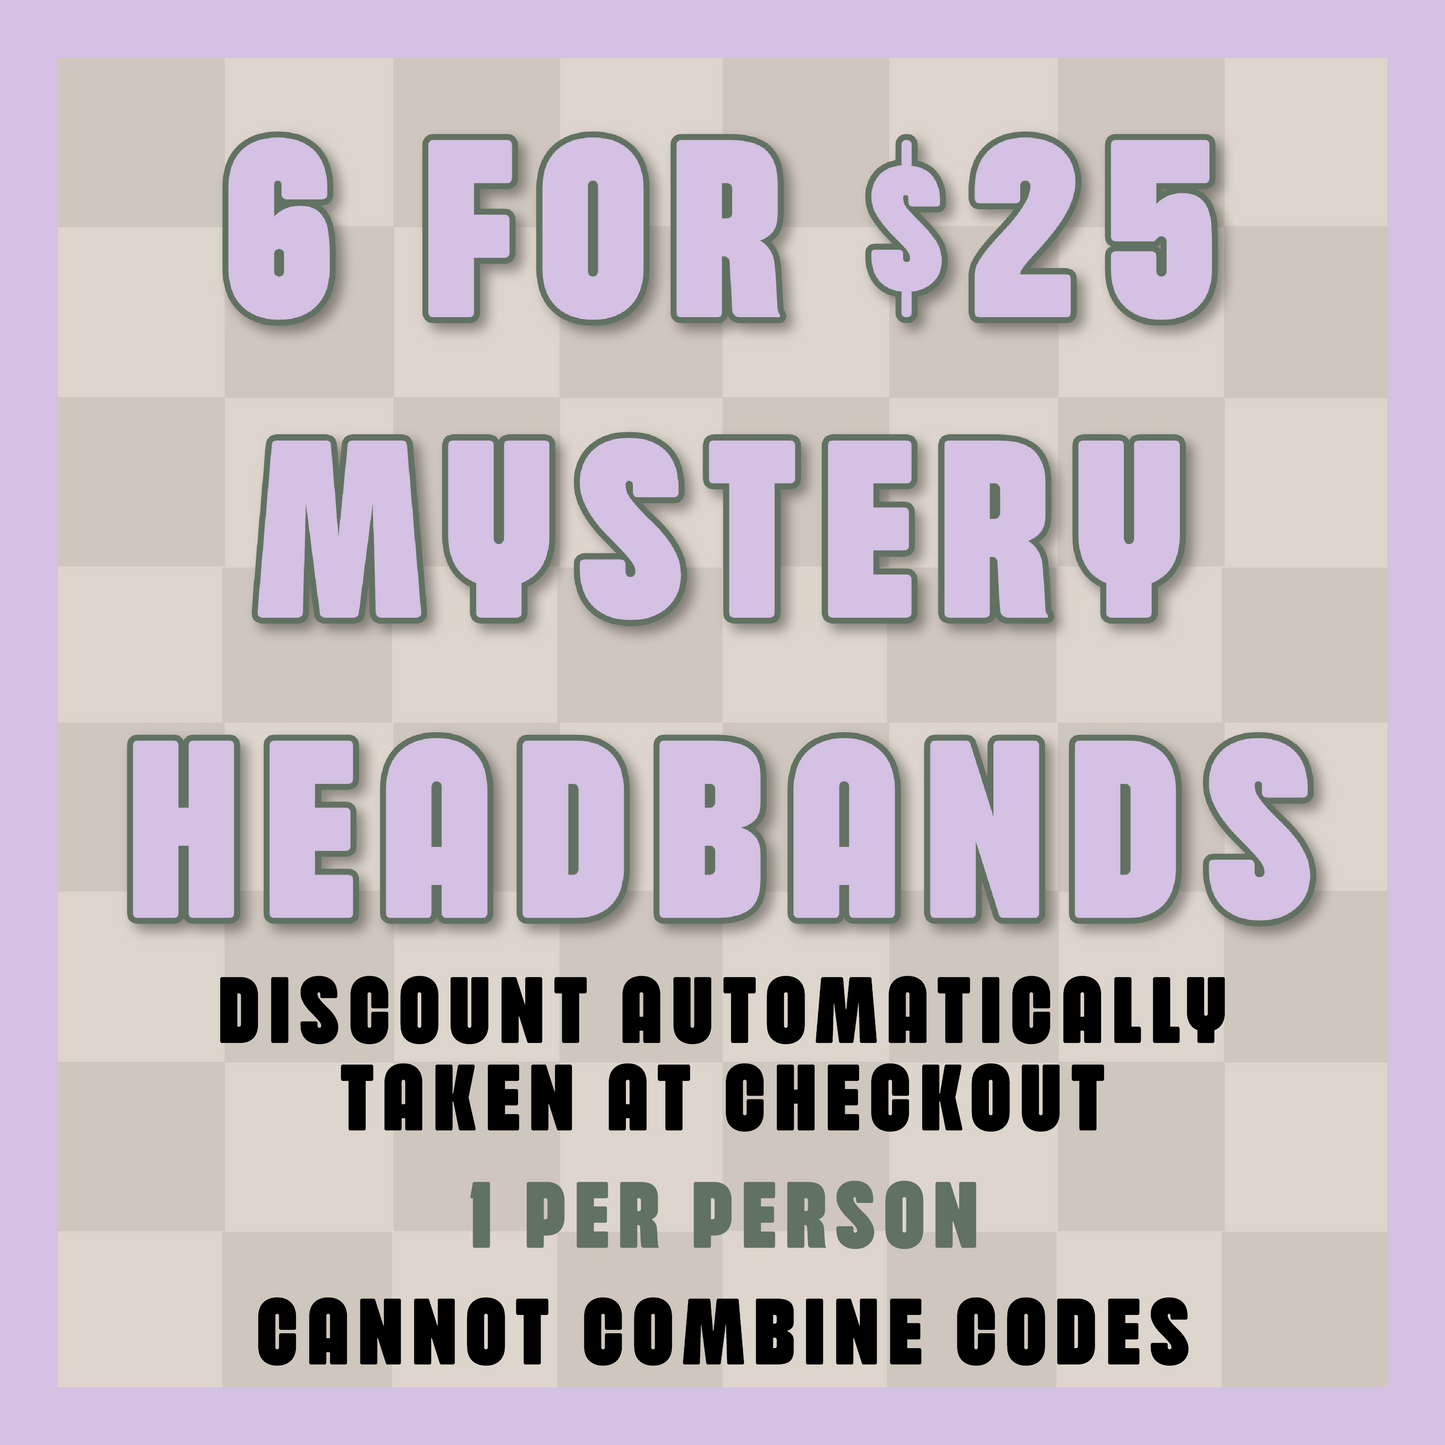 6 for $25 mystery headbands